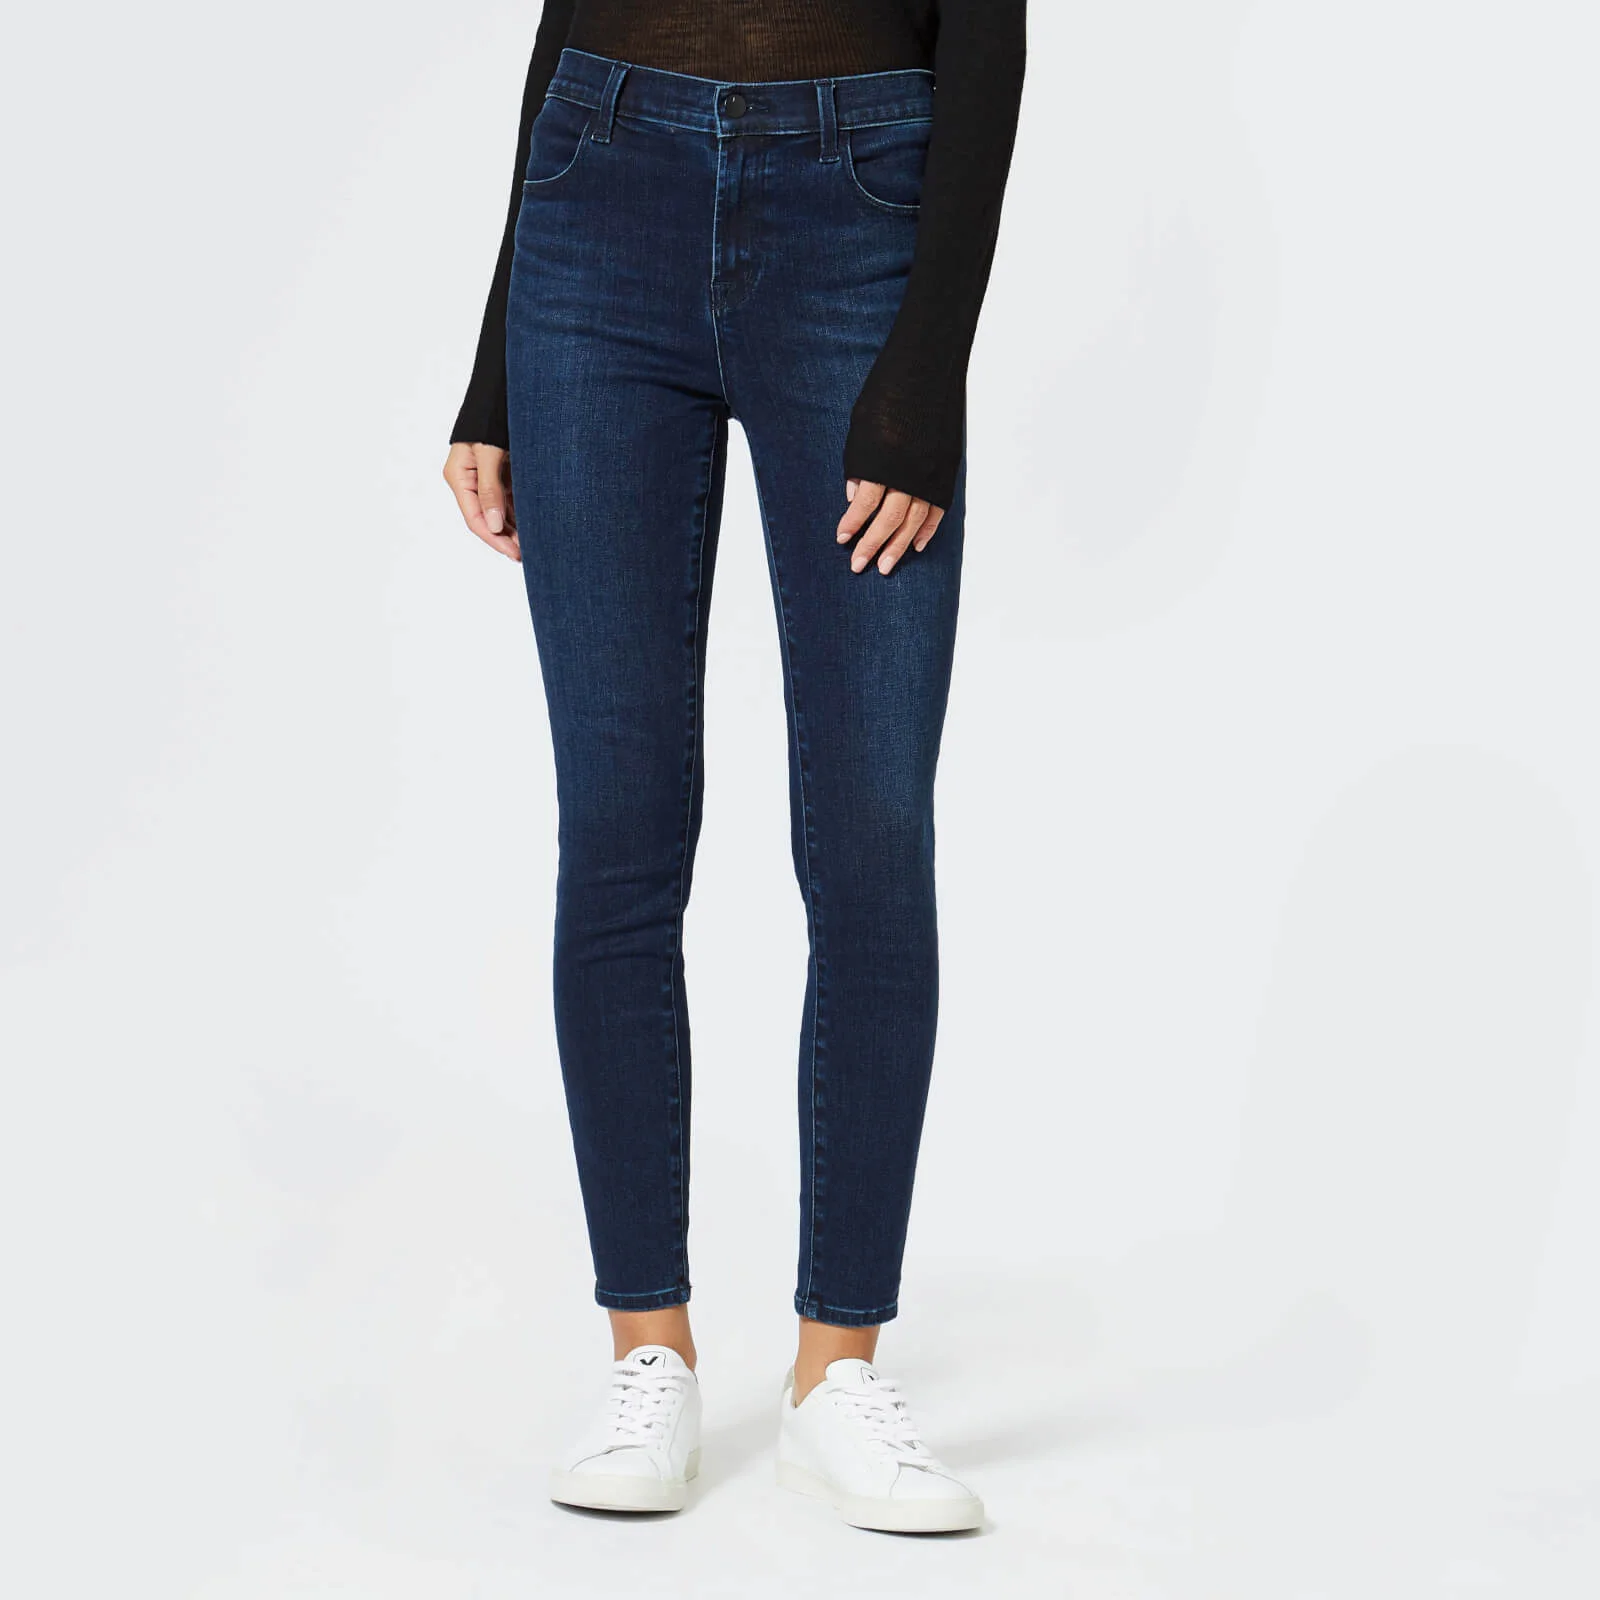 J Brand Women's Alana High Rise Skinny Jeans - Phased Image 1